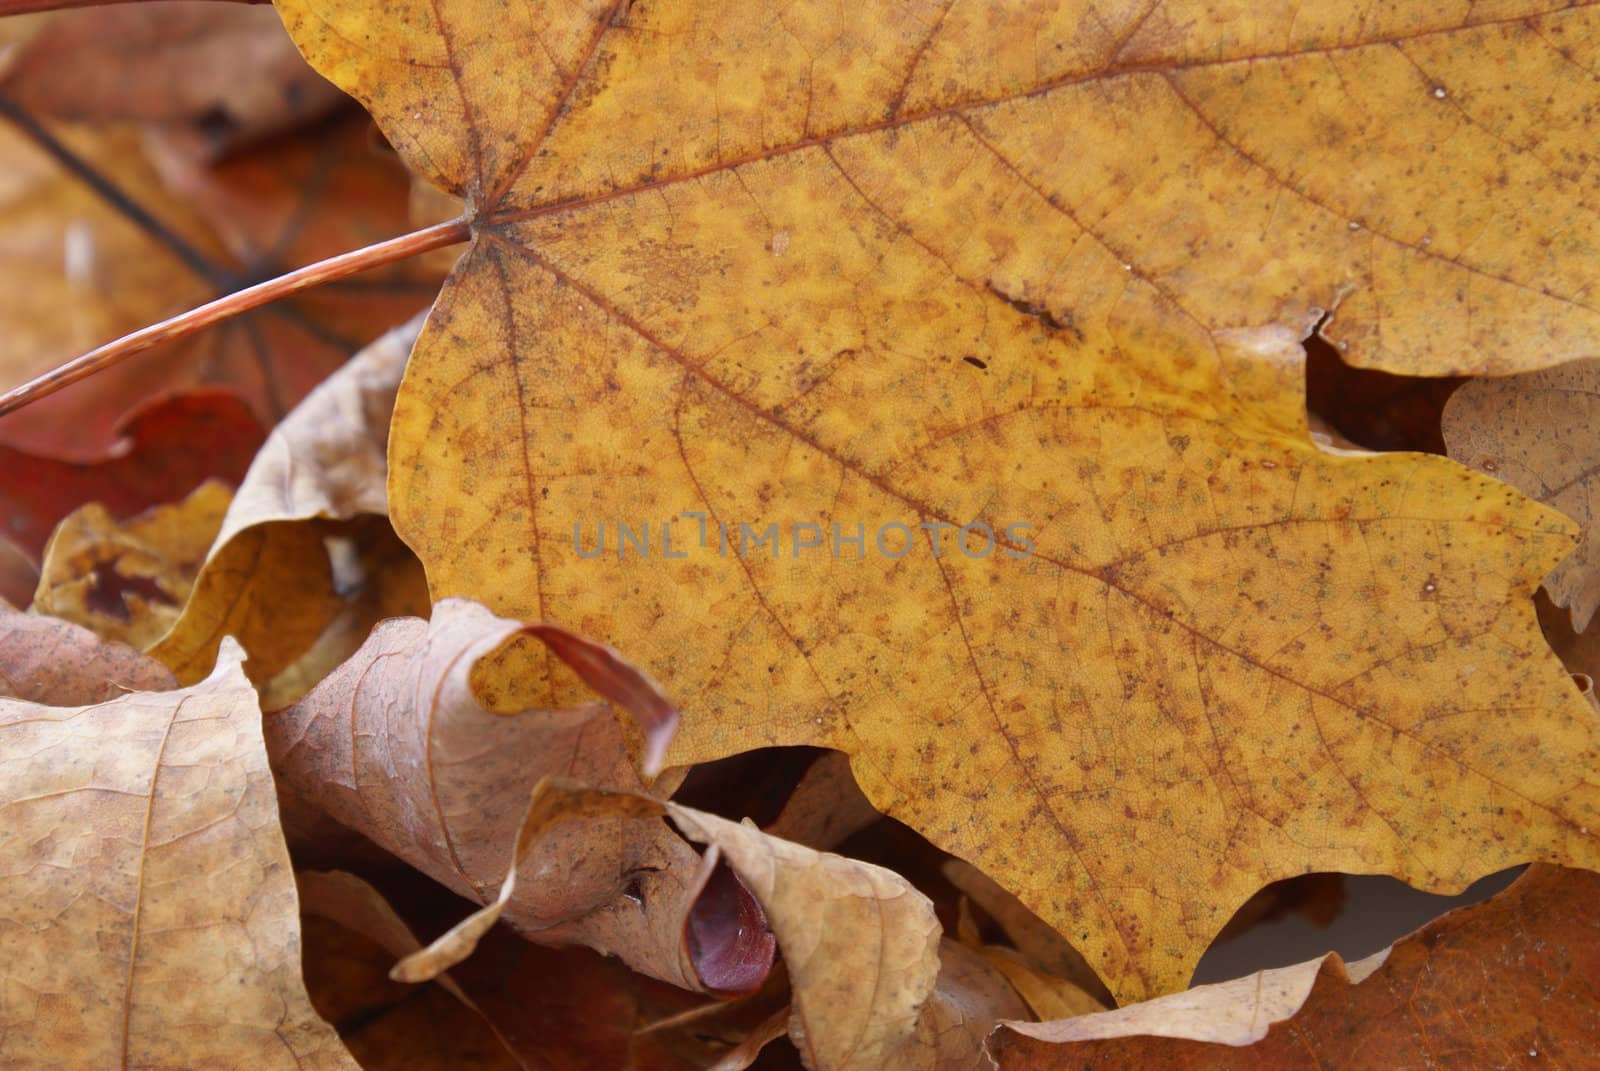 A macro shot of the fallen autumn leaves.